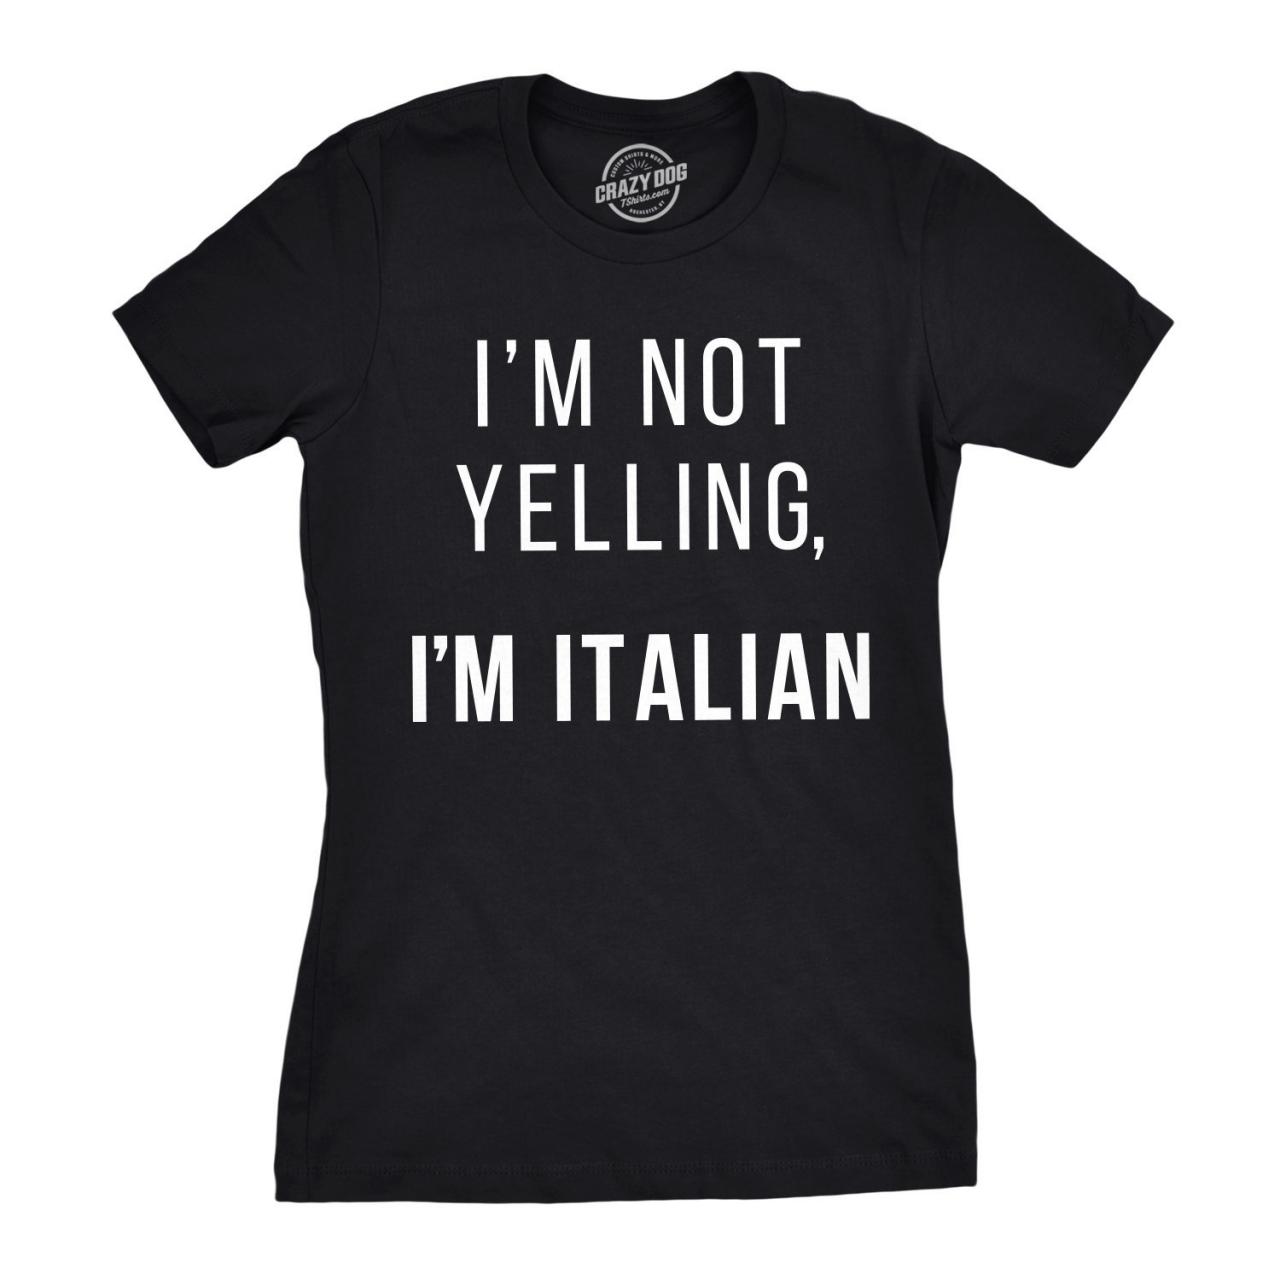 Funny Italian Shirt, Sarcastic Shirt Women, Love Italy, Funny Saying Shirts, Italian Pride, Im Not Yelling Im Italian, Offensive Shirt